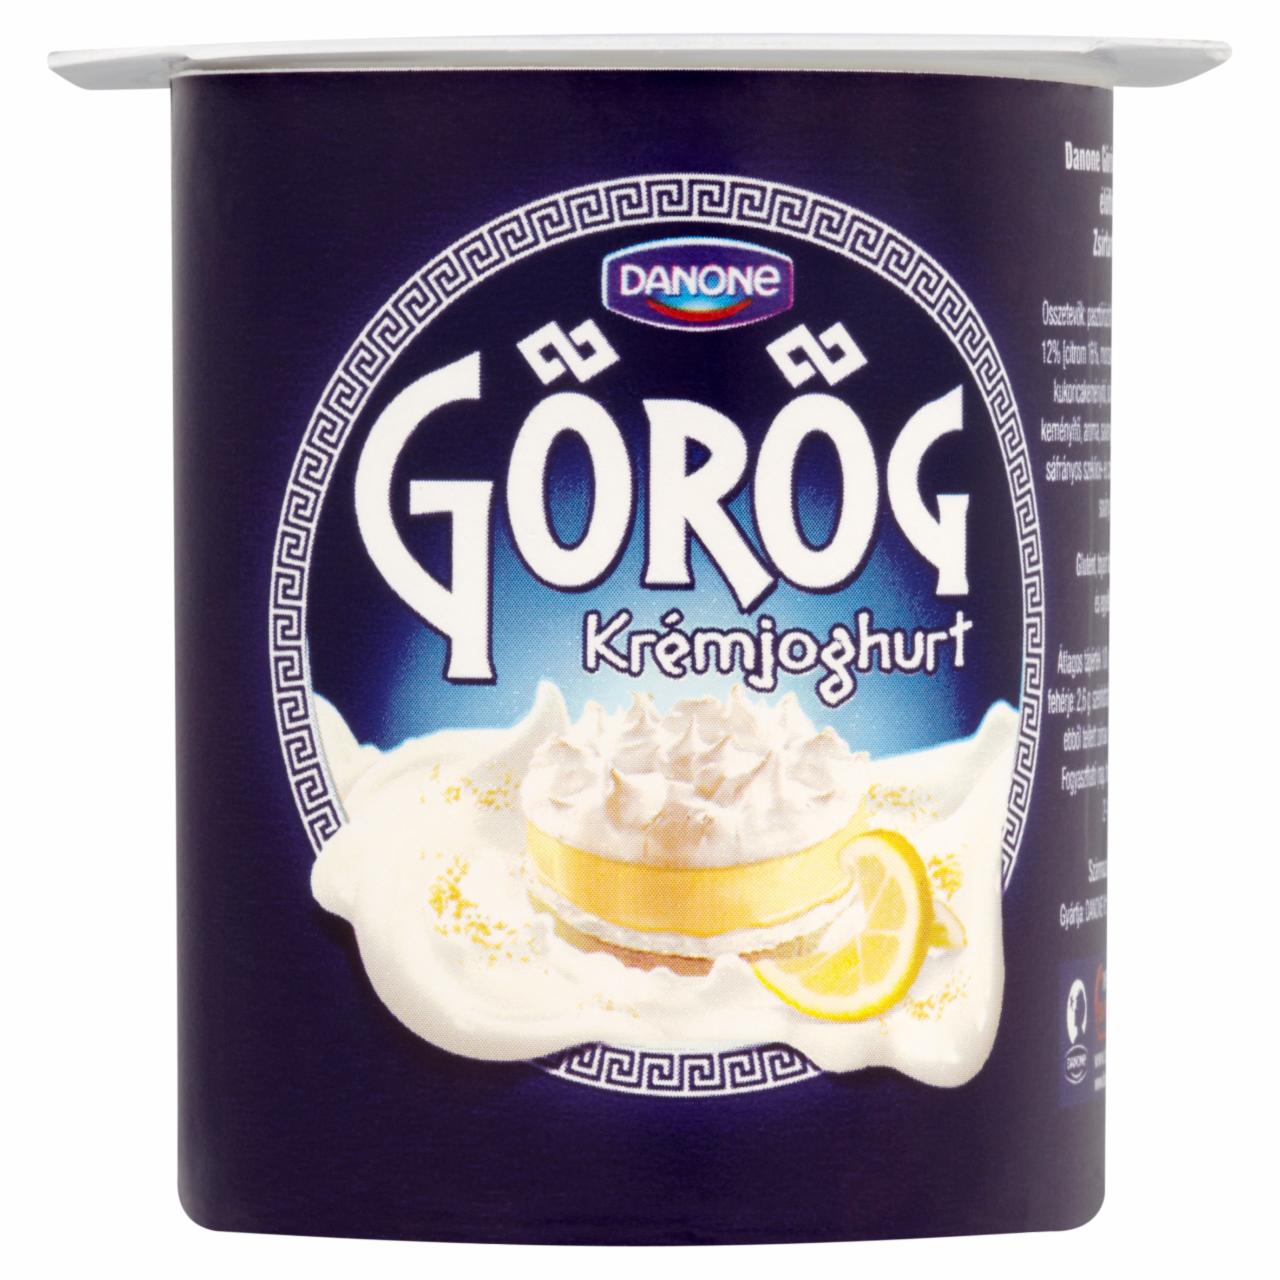 Képek - Danone Görög citromos túrótortaízű krémjoghurt 125 g